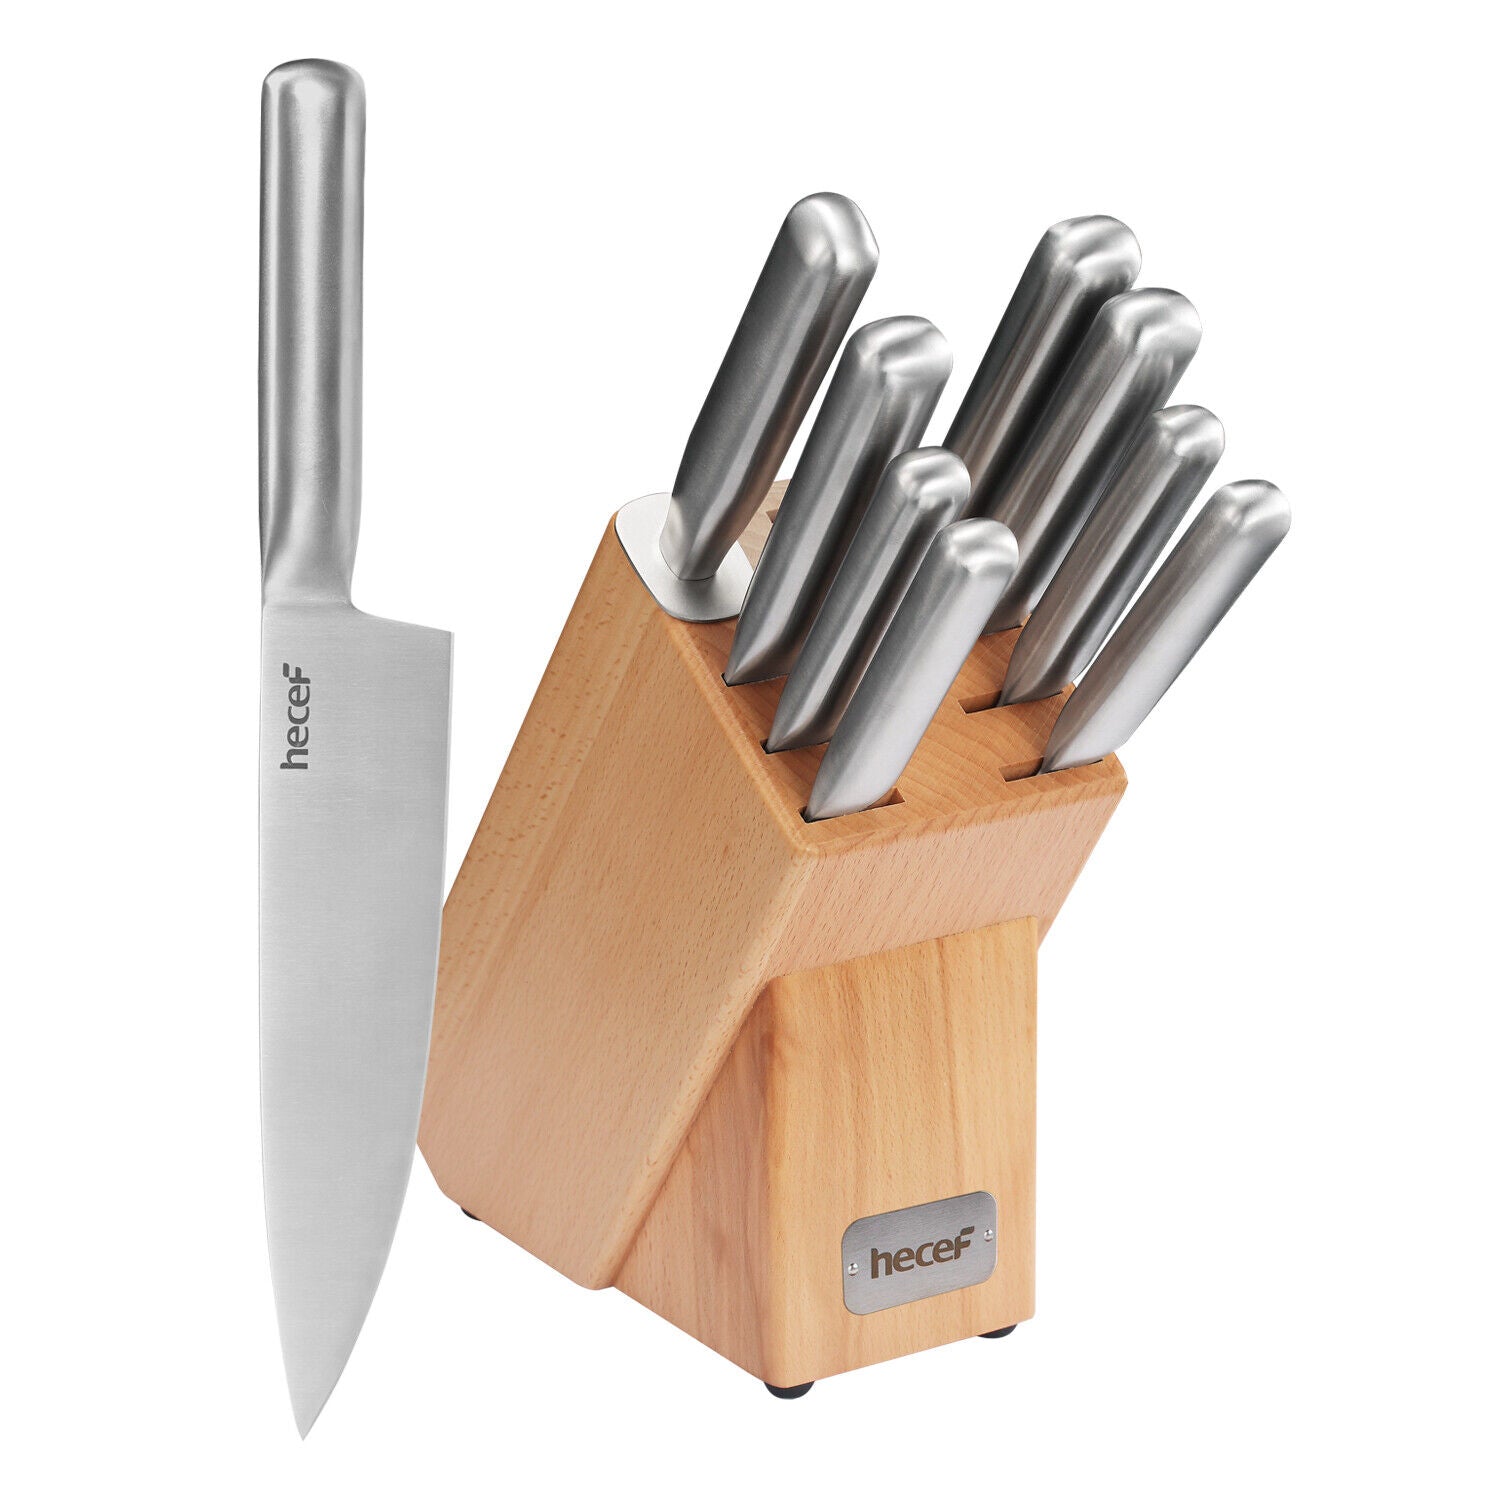 Hecef Block Knife Set, 10 Piece Kitchen Knife Set with Wooden Block & Sharpening Bar, Stainless Steel Chef Knife Set with Steak Knives - Hecef Kitchen